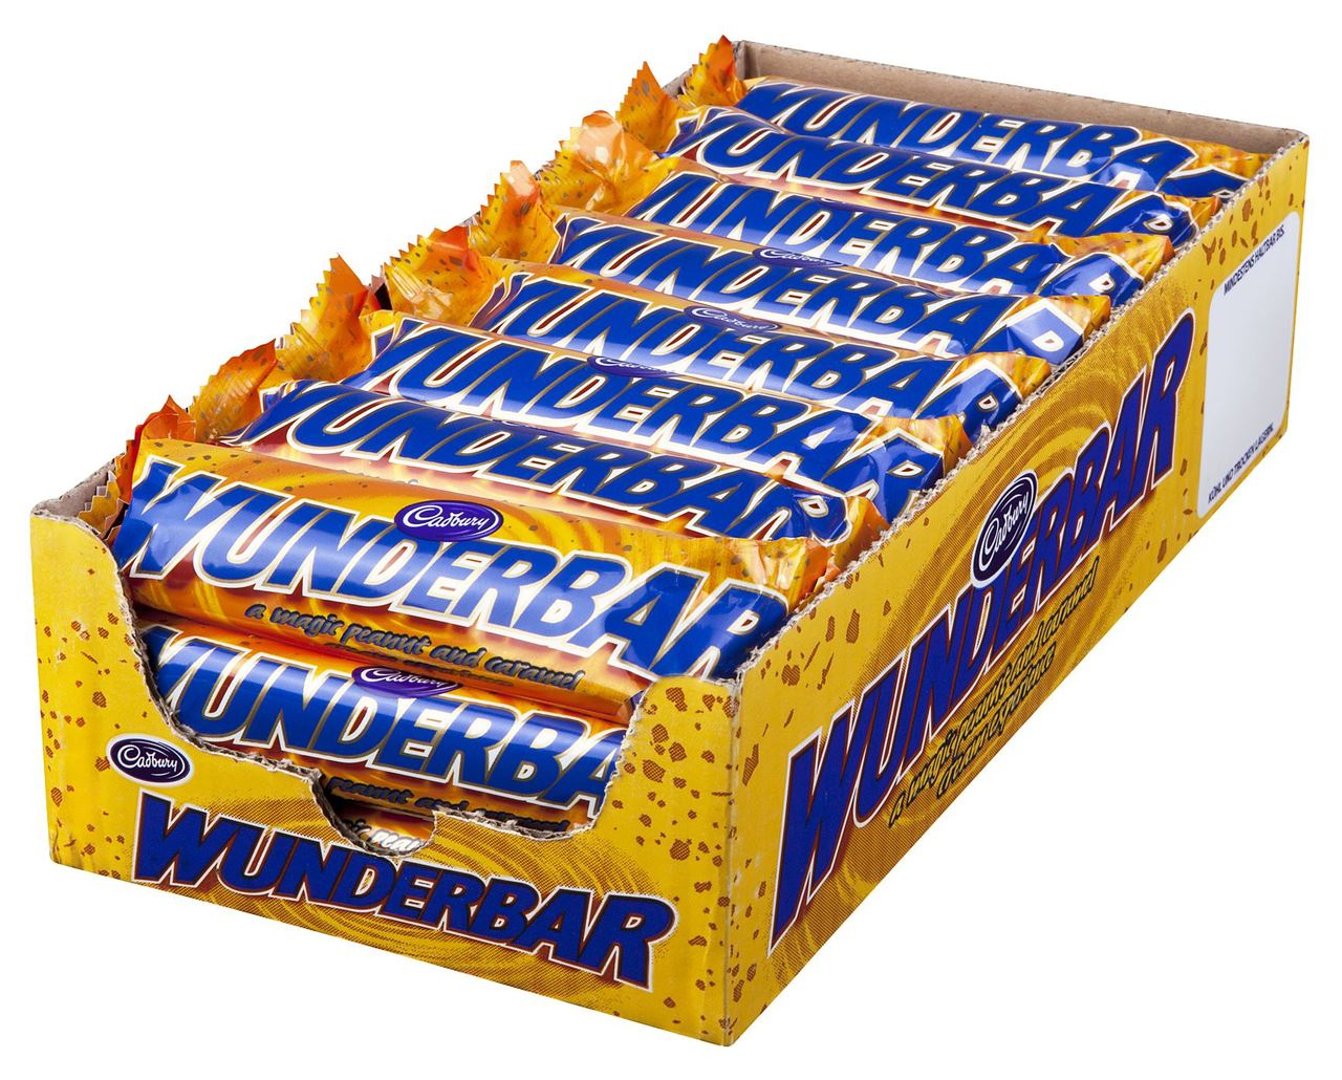 Cadbury WUNDERBAR - Peanut-Butter Schokoriegel 24 x 49 g